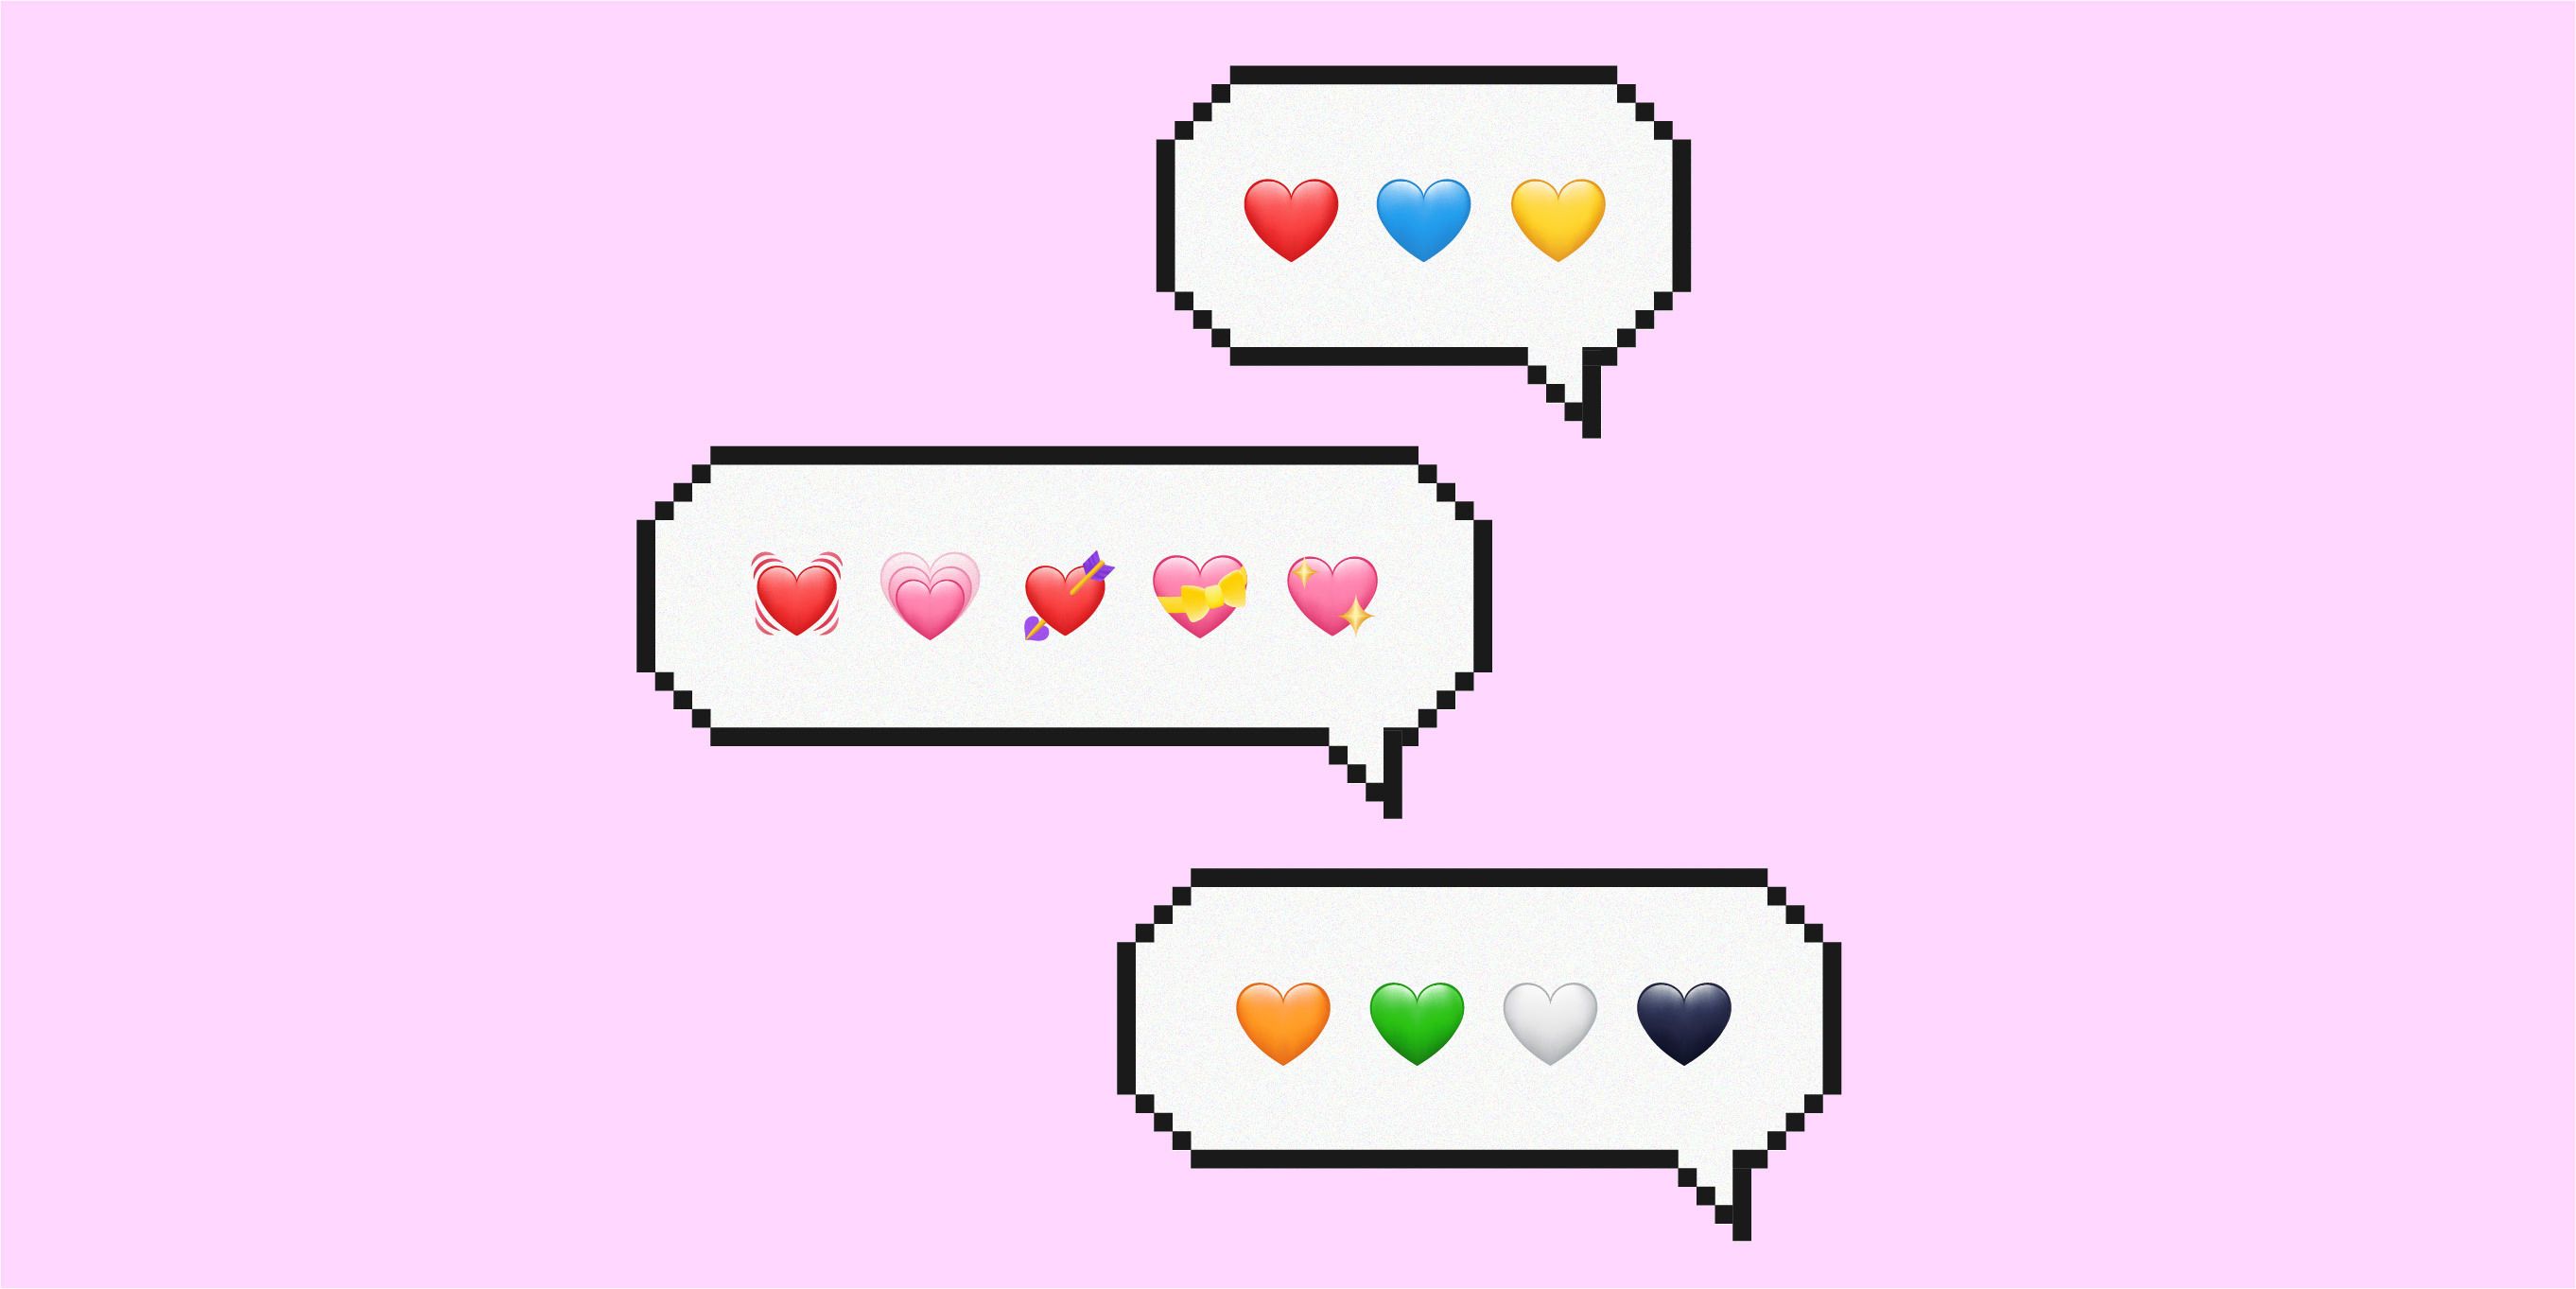 Instagram Emoji Guide: Meanings, Reactions, Ideas